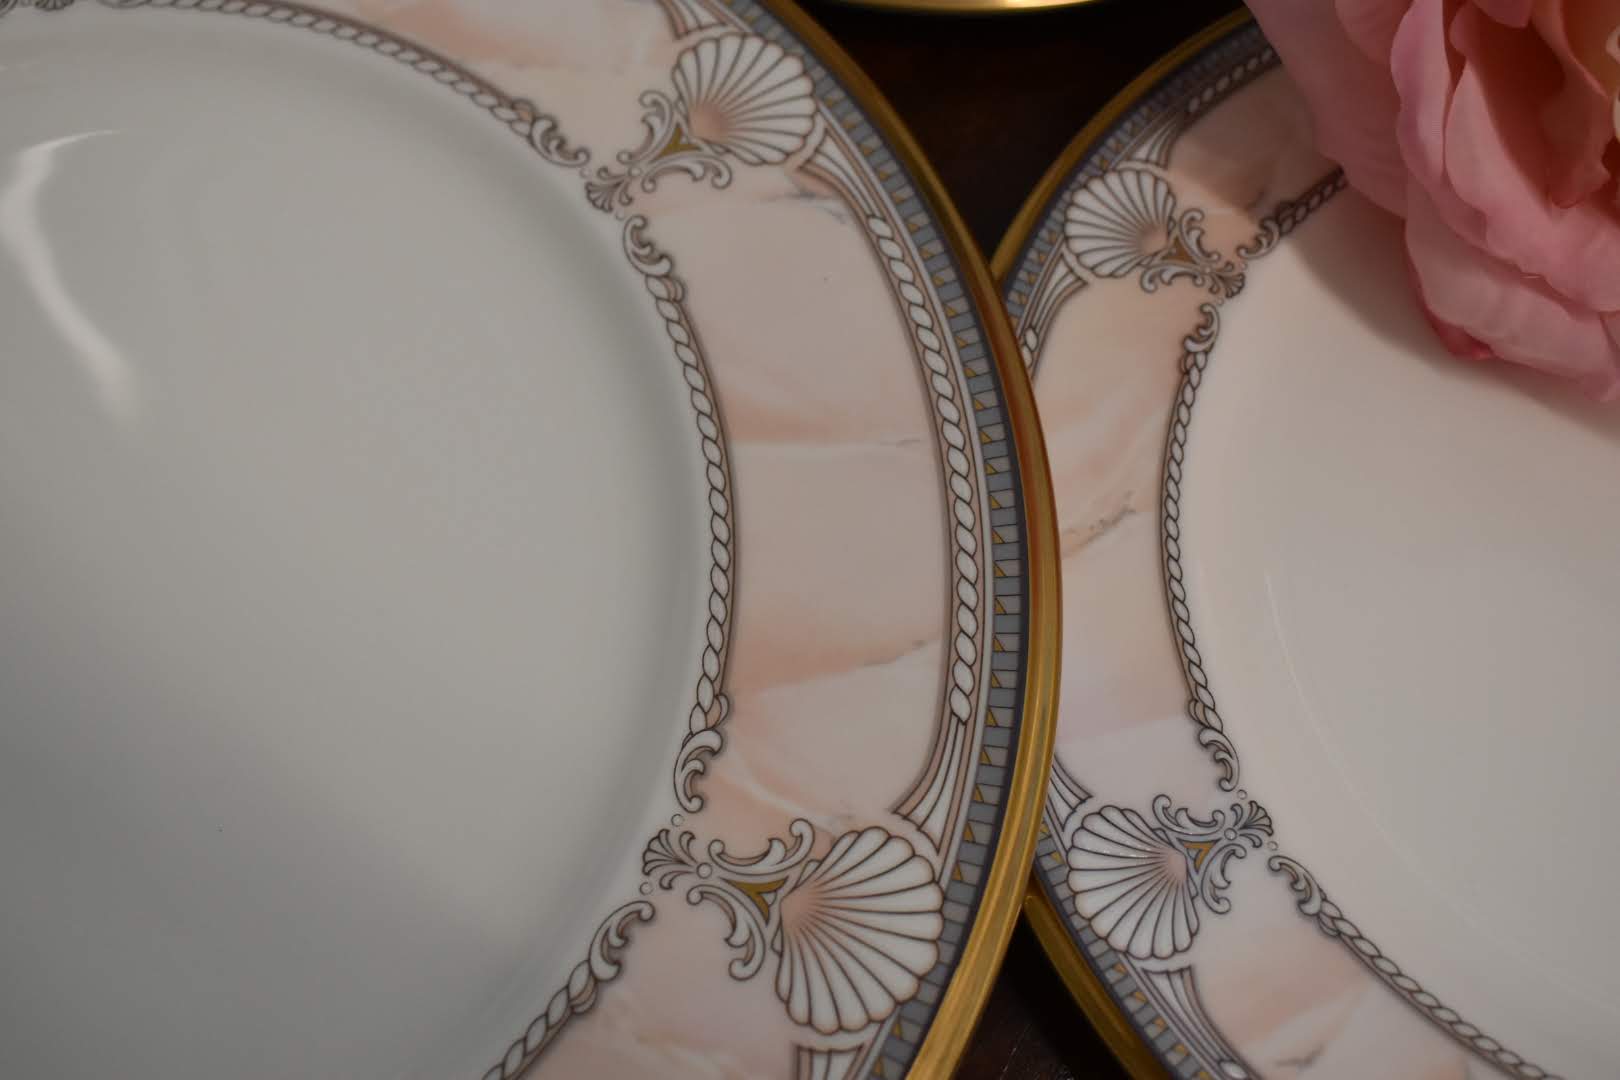 Noritake Pacific Majesty - Fine Porcelain China - 5 Piece Dinner Set - 1 place setting